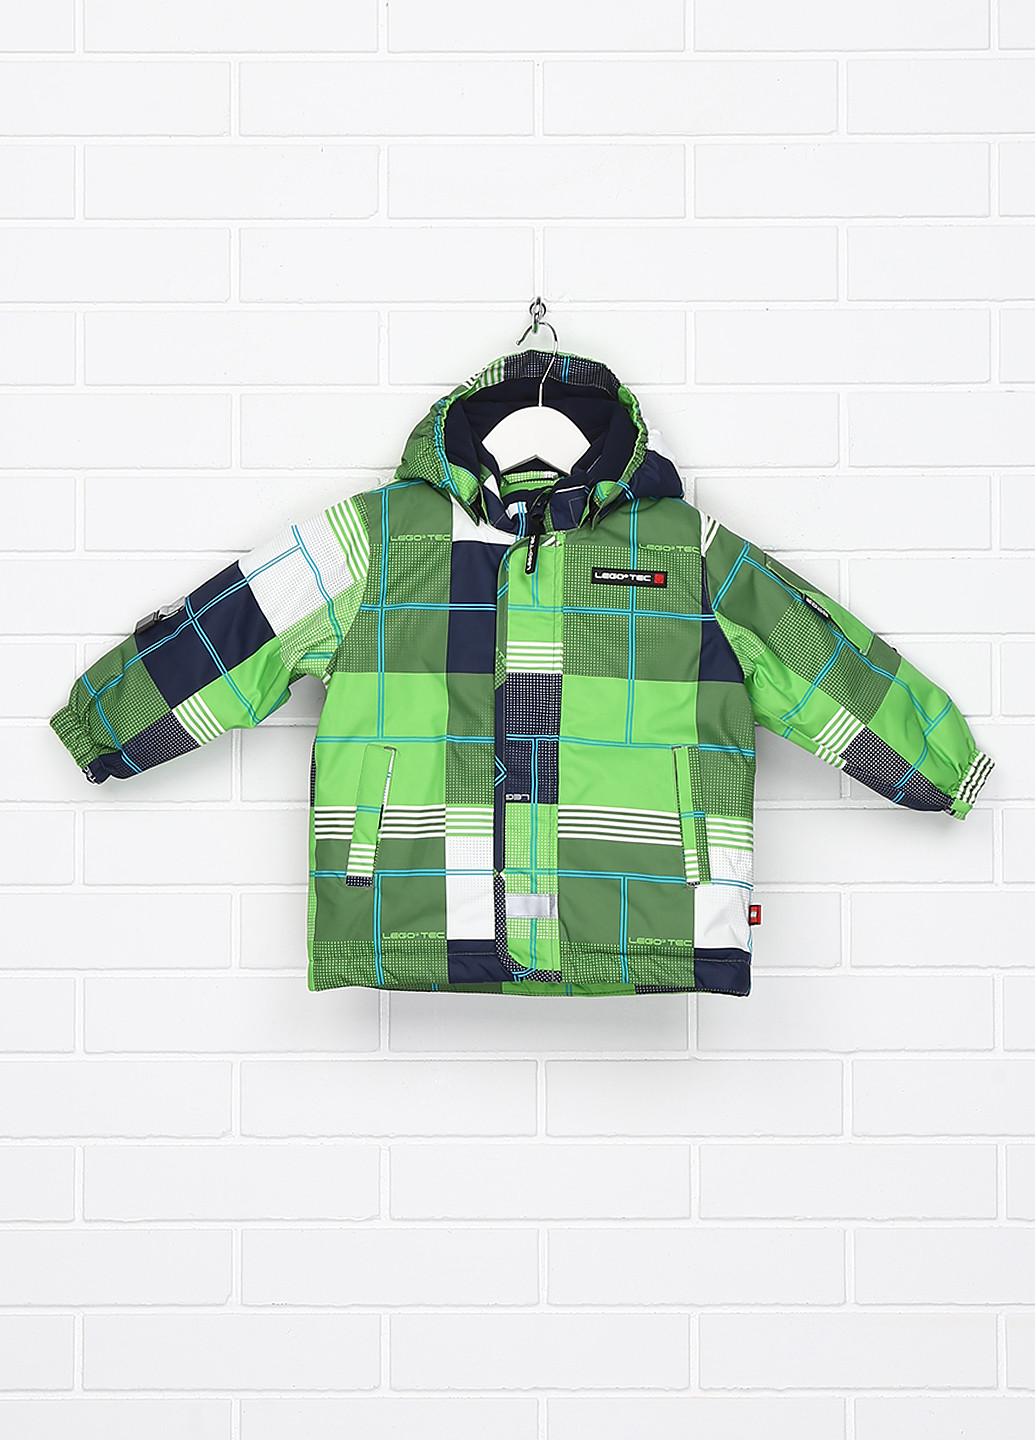 Зеленая зимняя куртка Lego